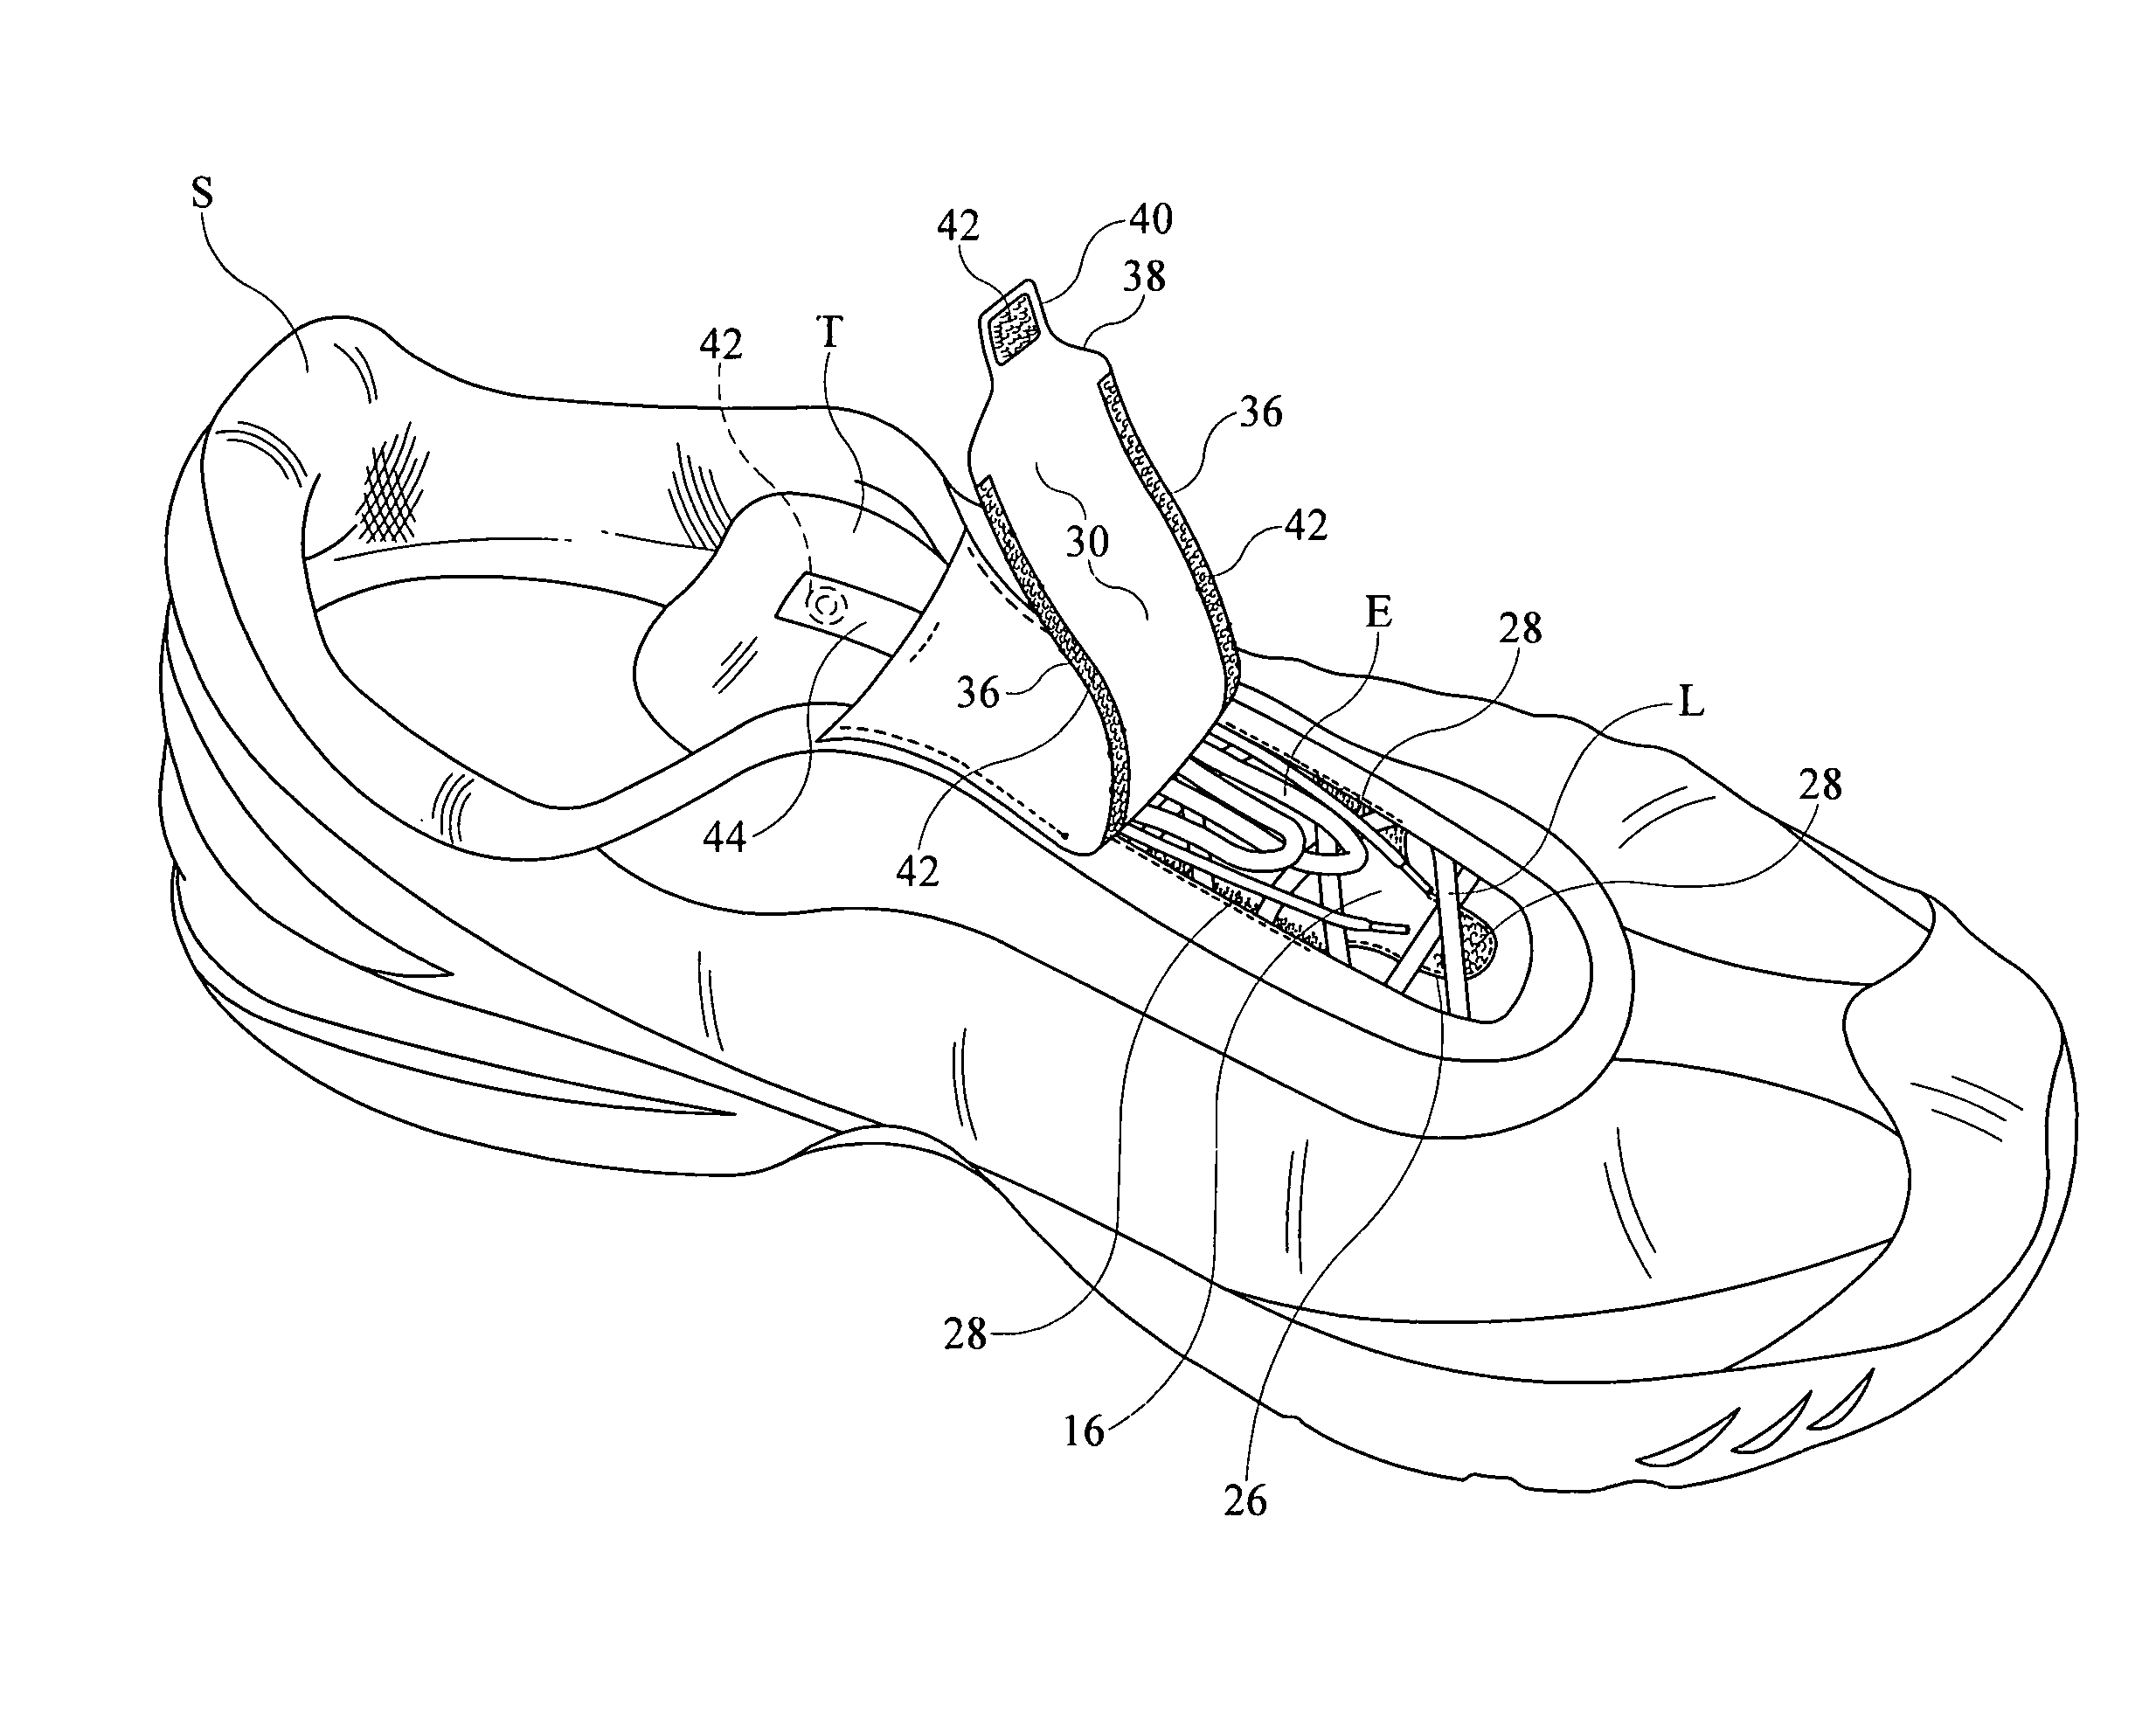 Shoe lace cover